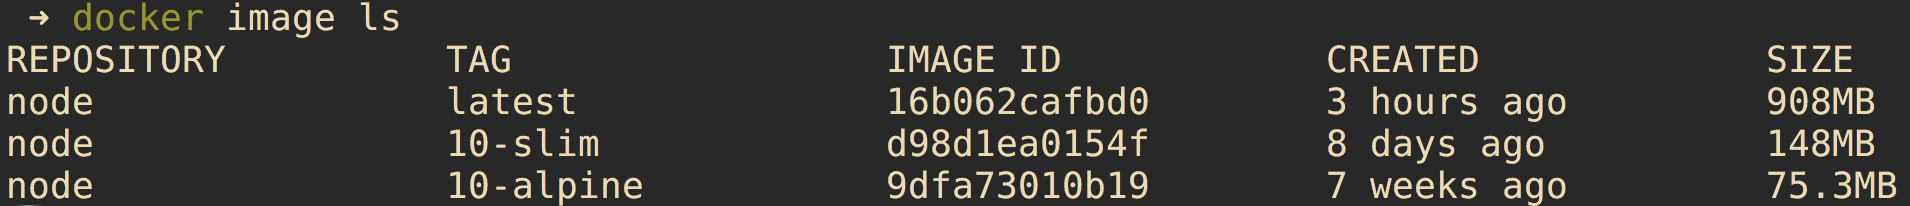 Docker image ls node